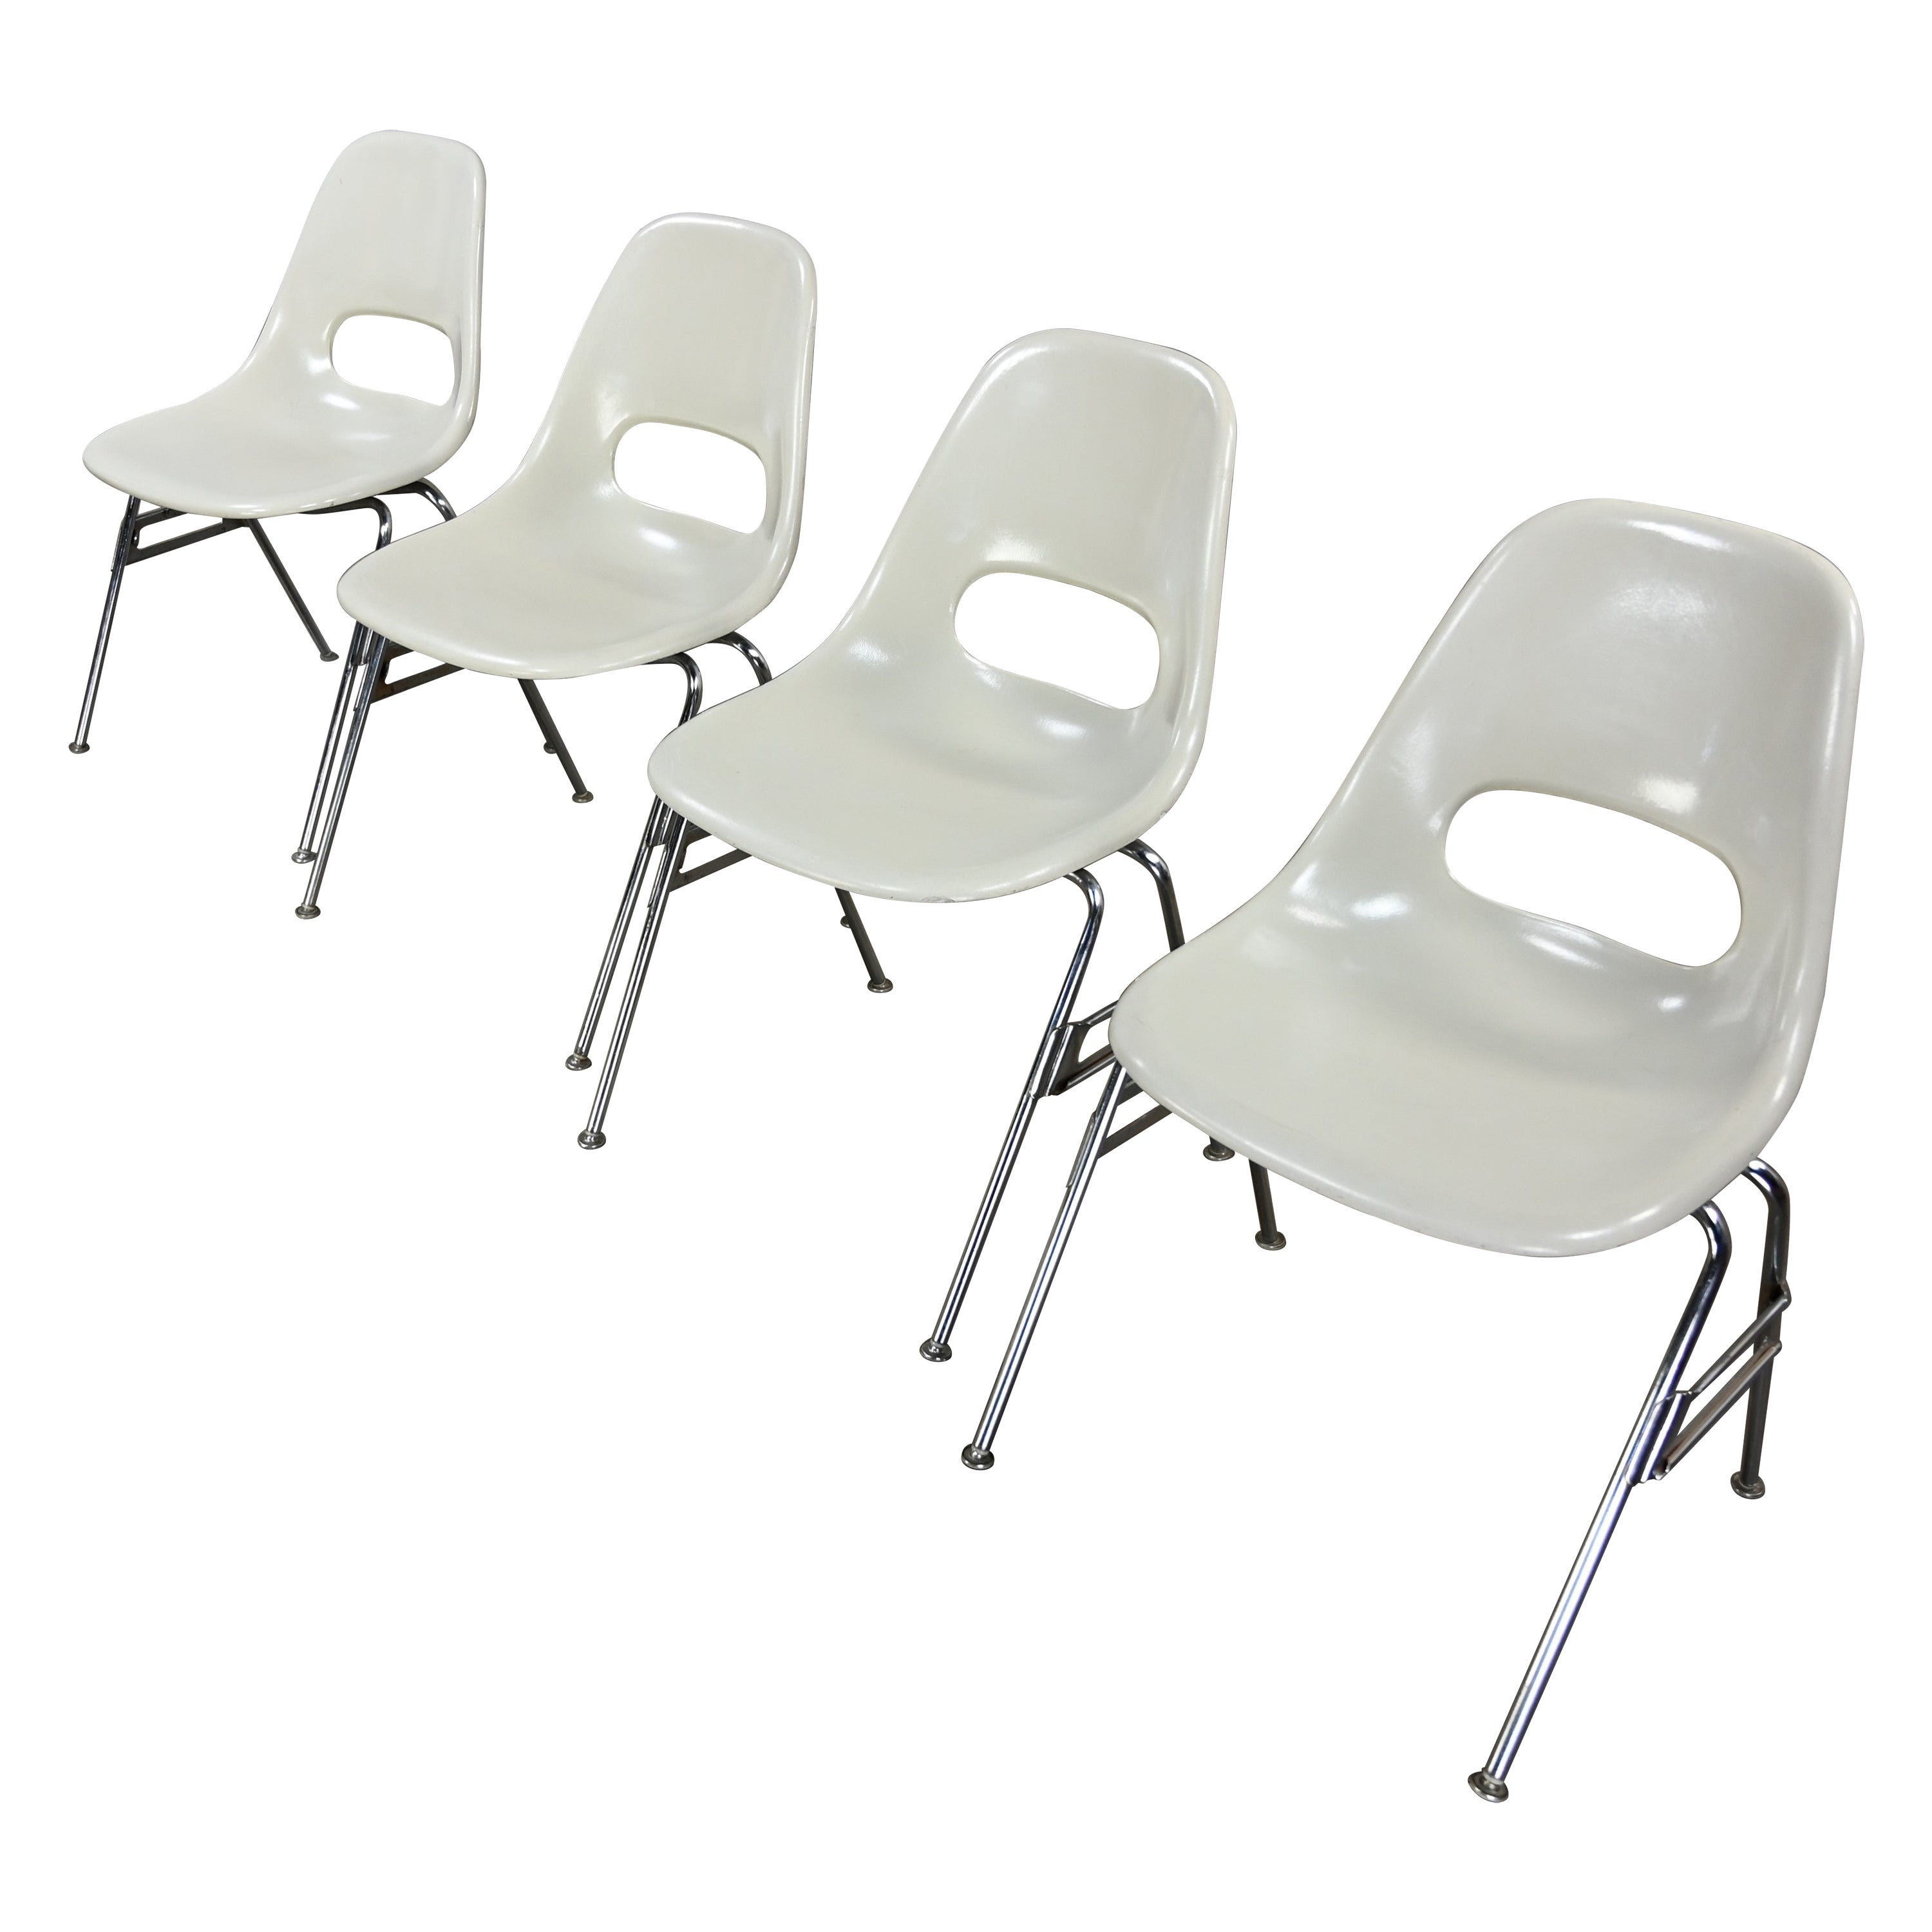 1960-70's MCM Krueger International White Fiberglass & Chrome Stacking Chairs 4